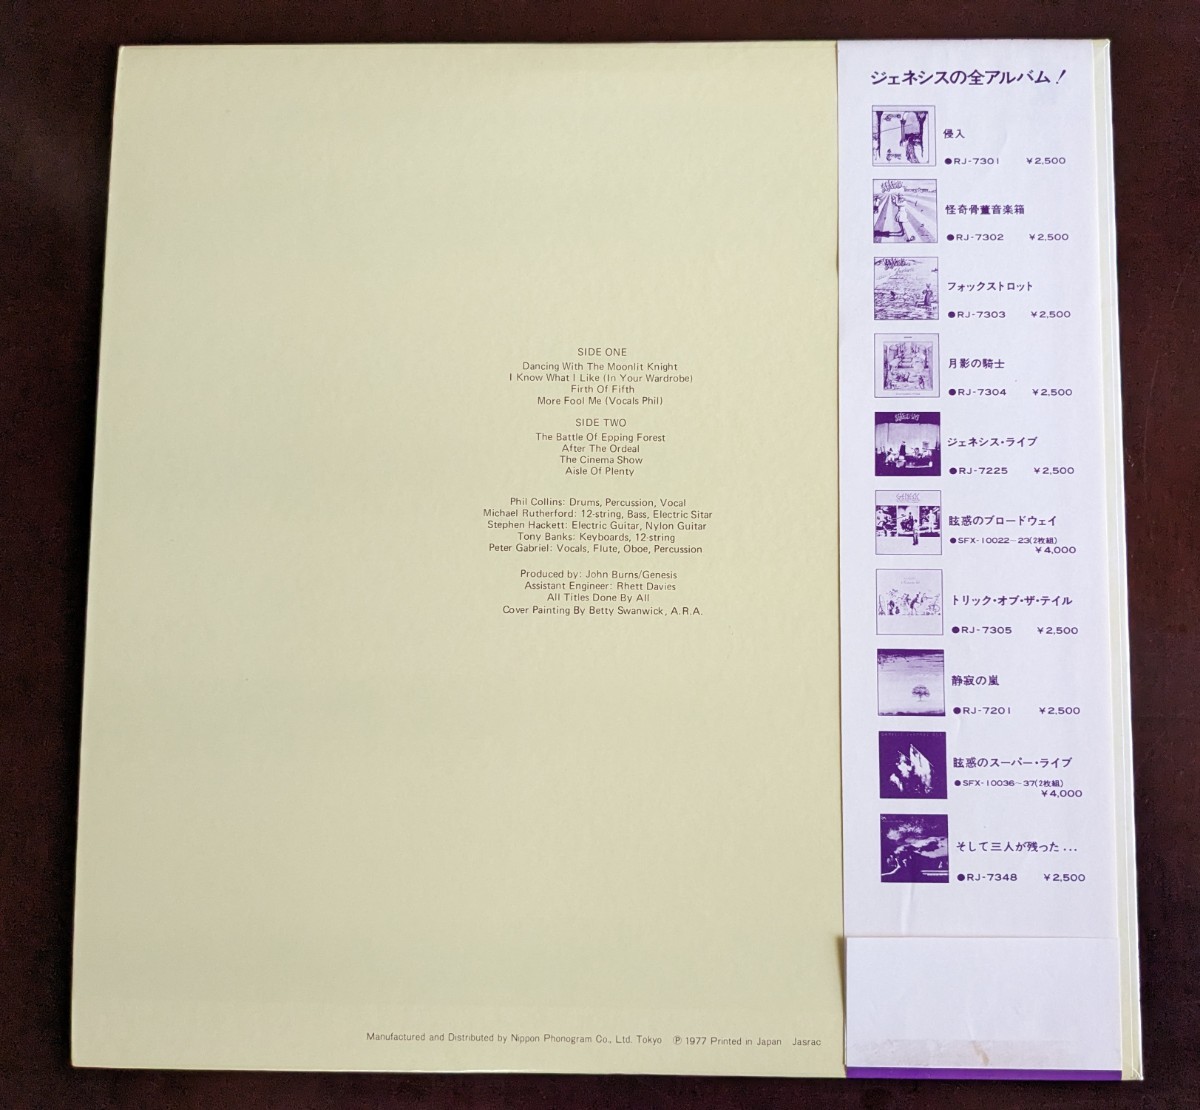 GENESIS ジェネシス / Selling England By The Pound 月影の騎士　国内盤　LP　帯付き（1978年・RJ-7304)_画像2